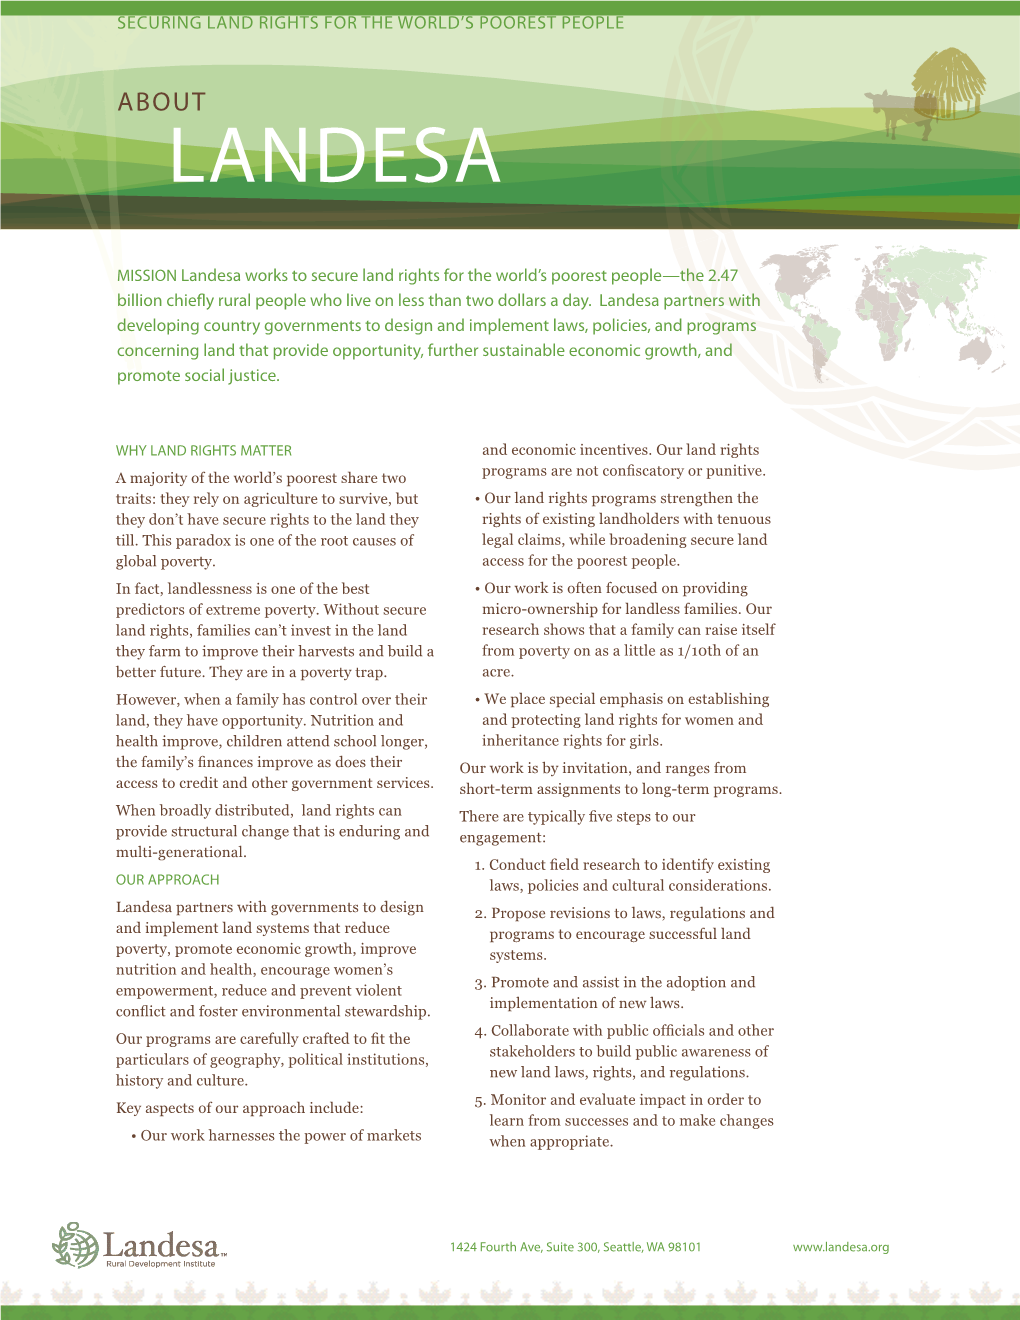 About Landesa